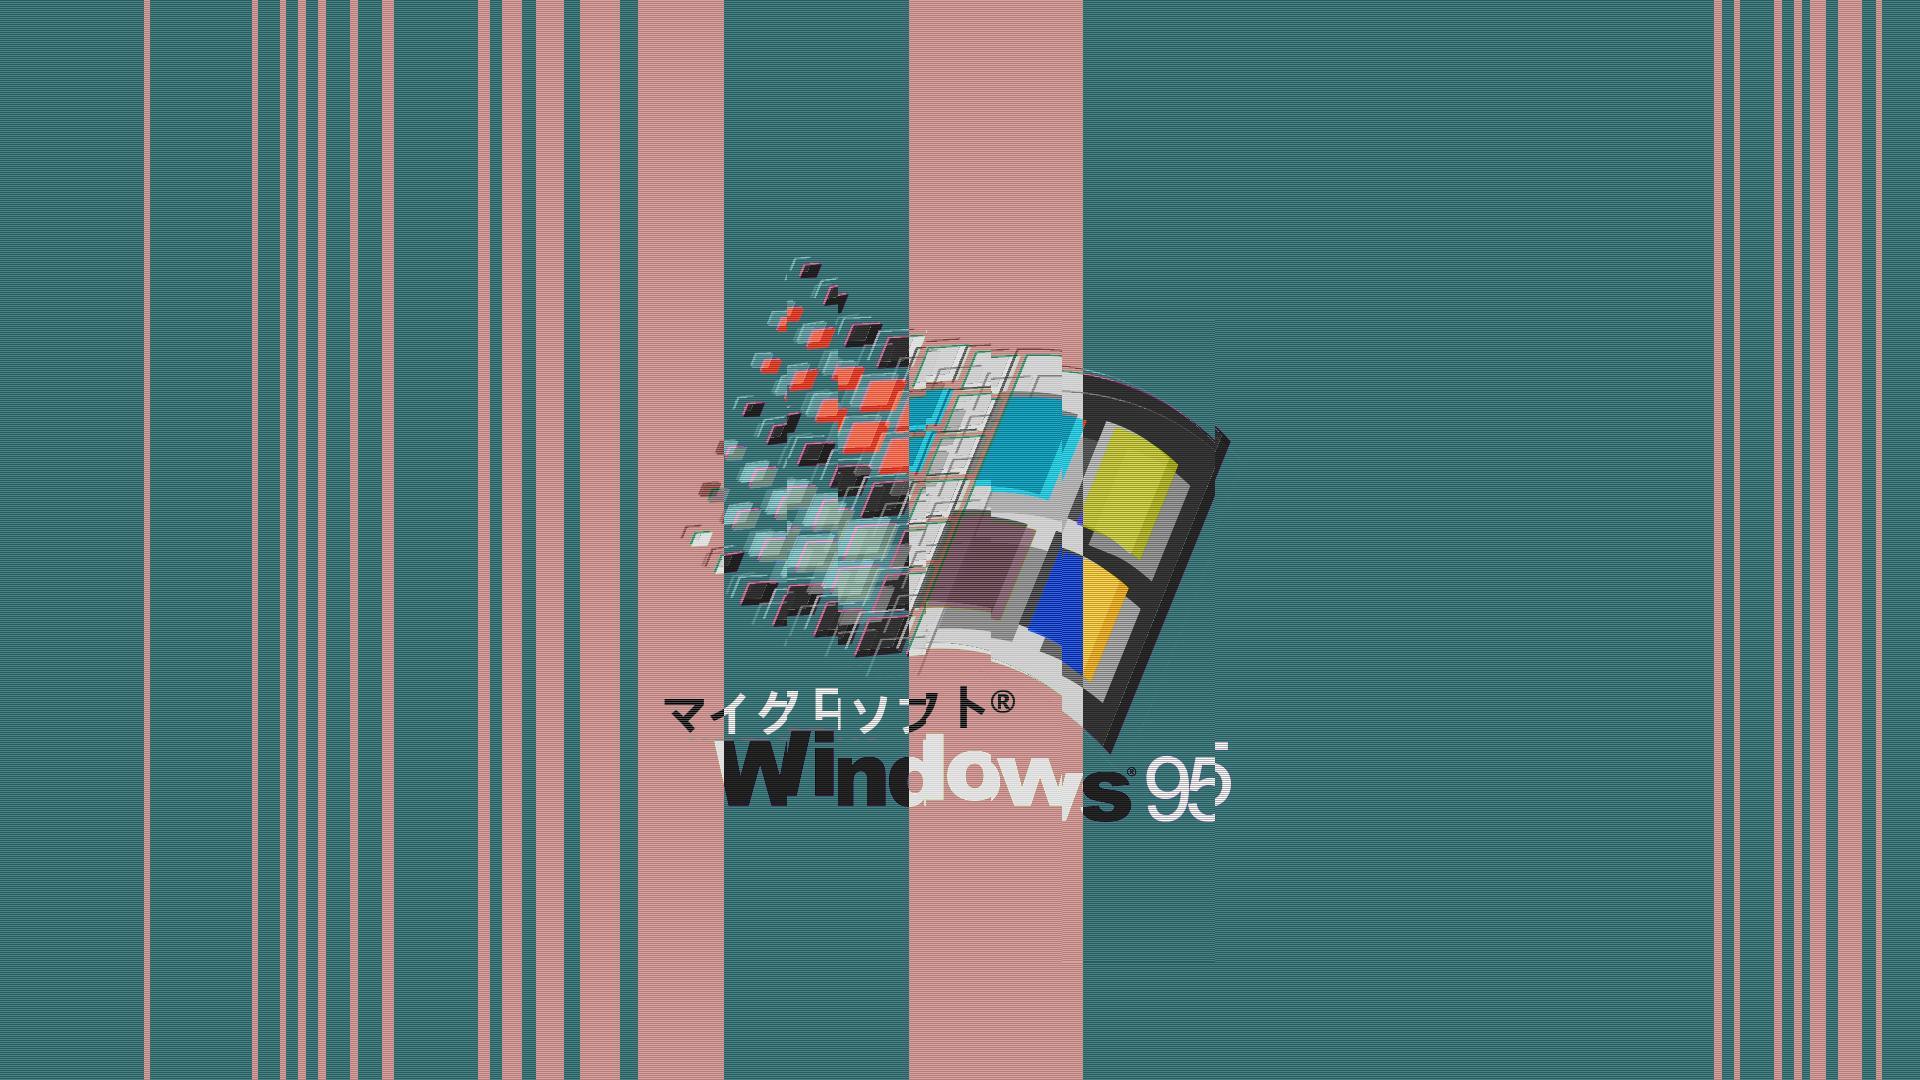  Windows XP Hintergrundbild 1920x1080. Windows 95 Aesthetic Wallpaper Free Windows 95 Aesthetic Background